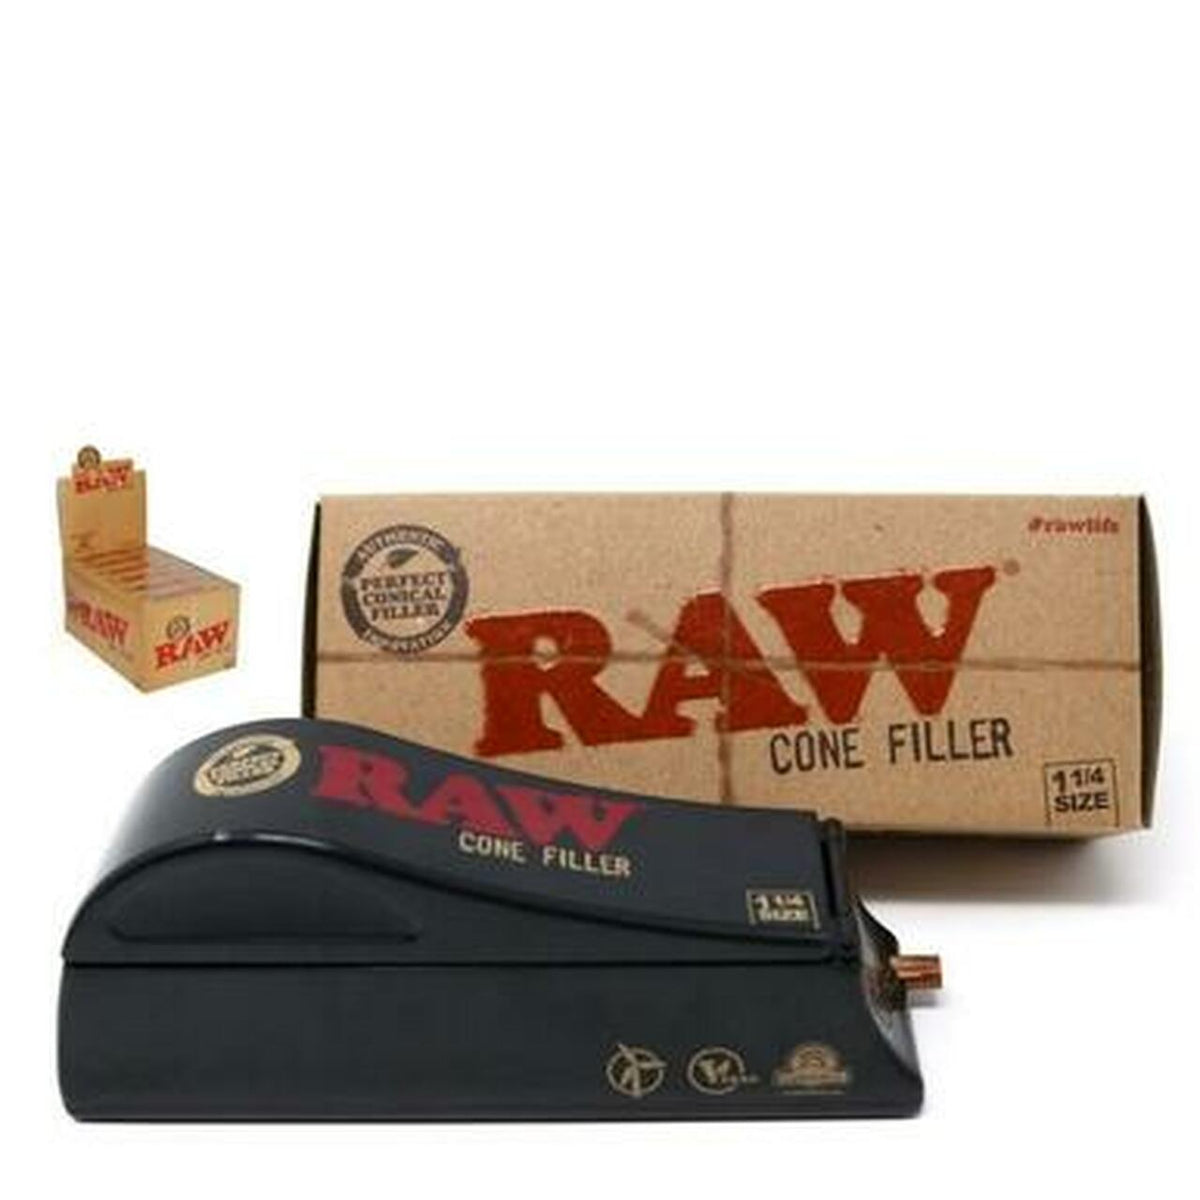 Raw - Cone Filler